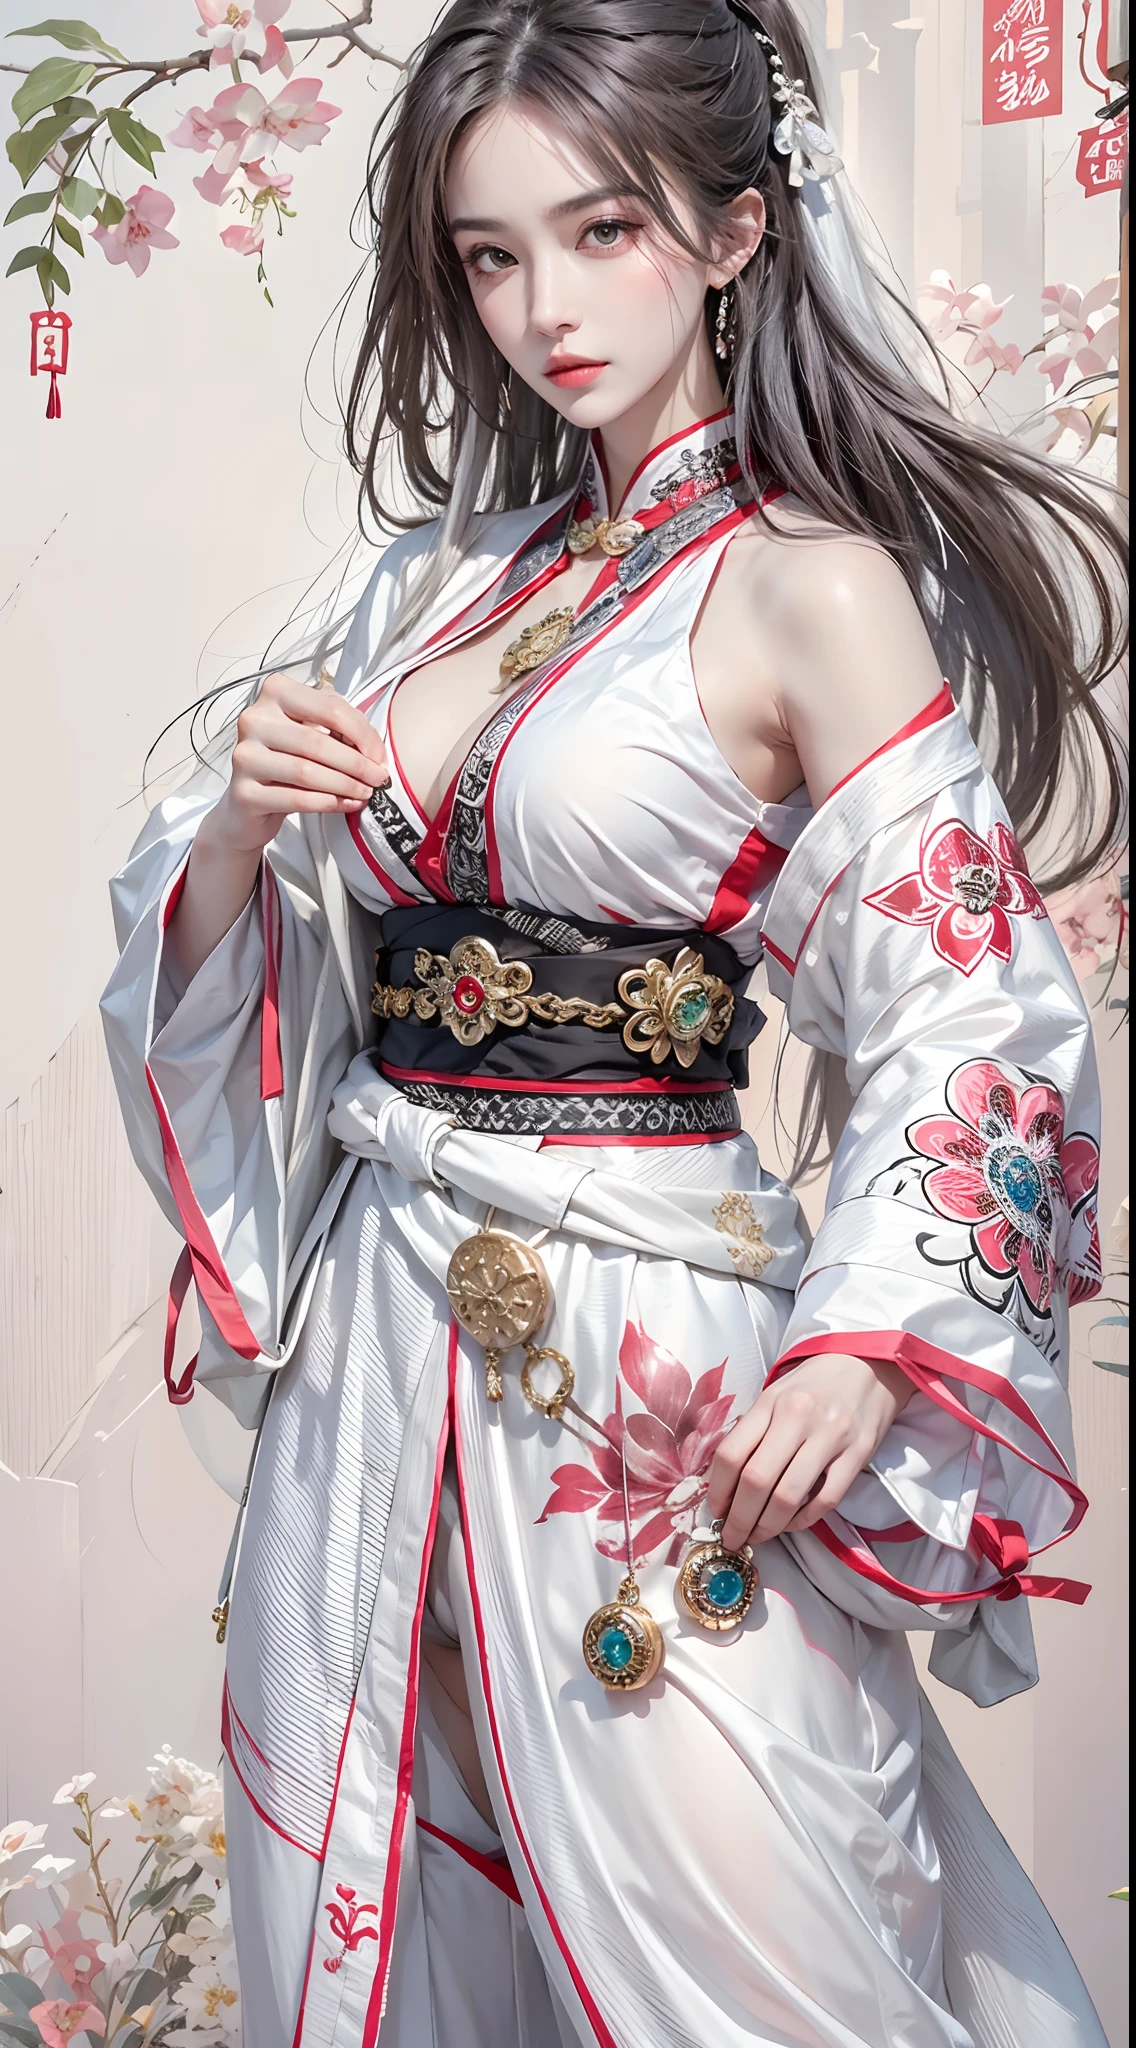 alta resolución, 1 mujer, caderas arriba, pelo largo, joyas, tatuaje, pelo blanco, Uso de Kungfu